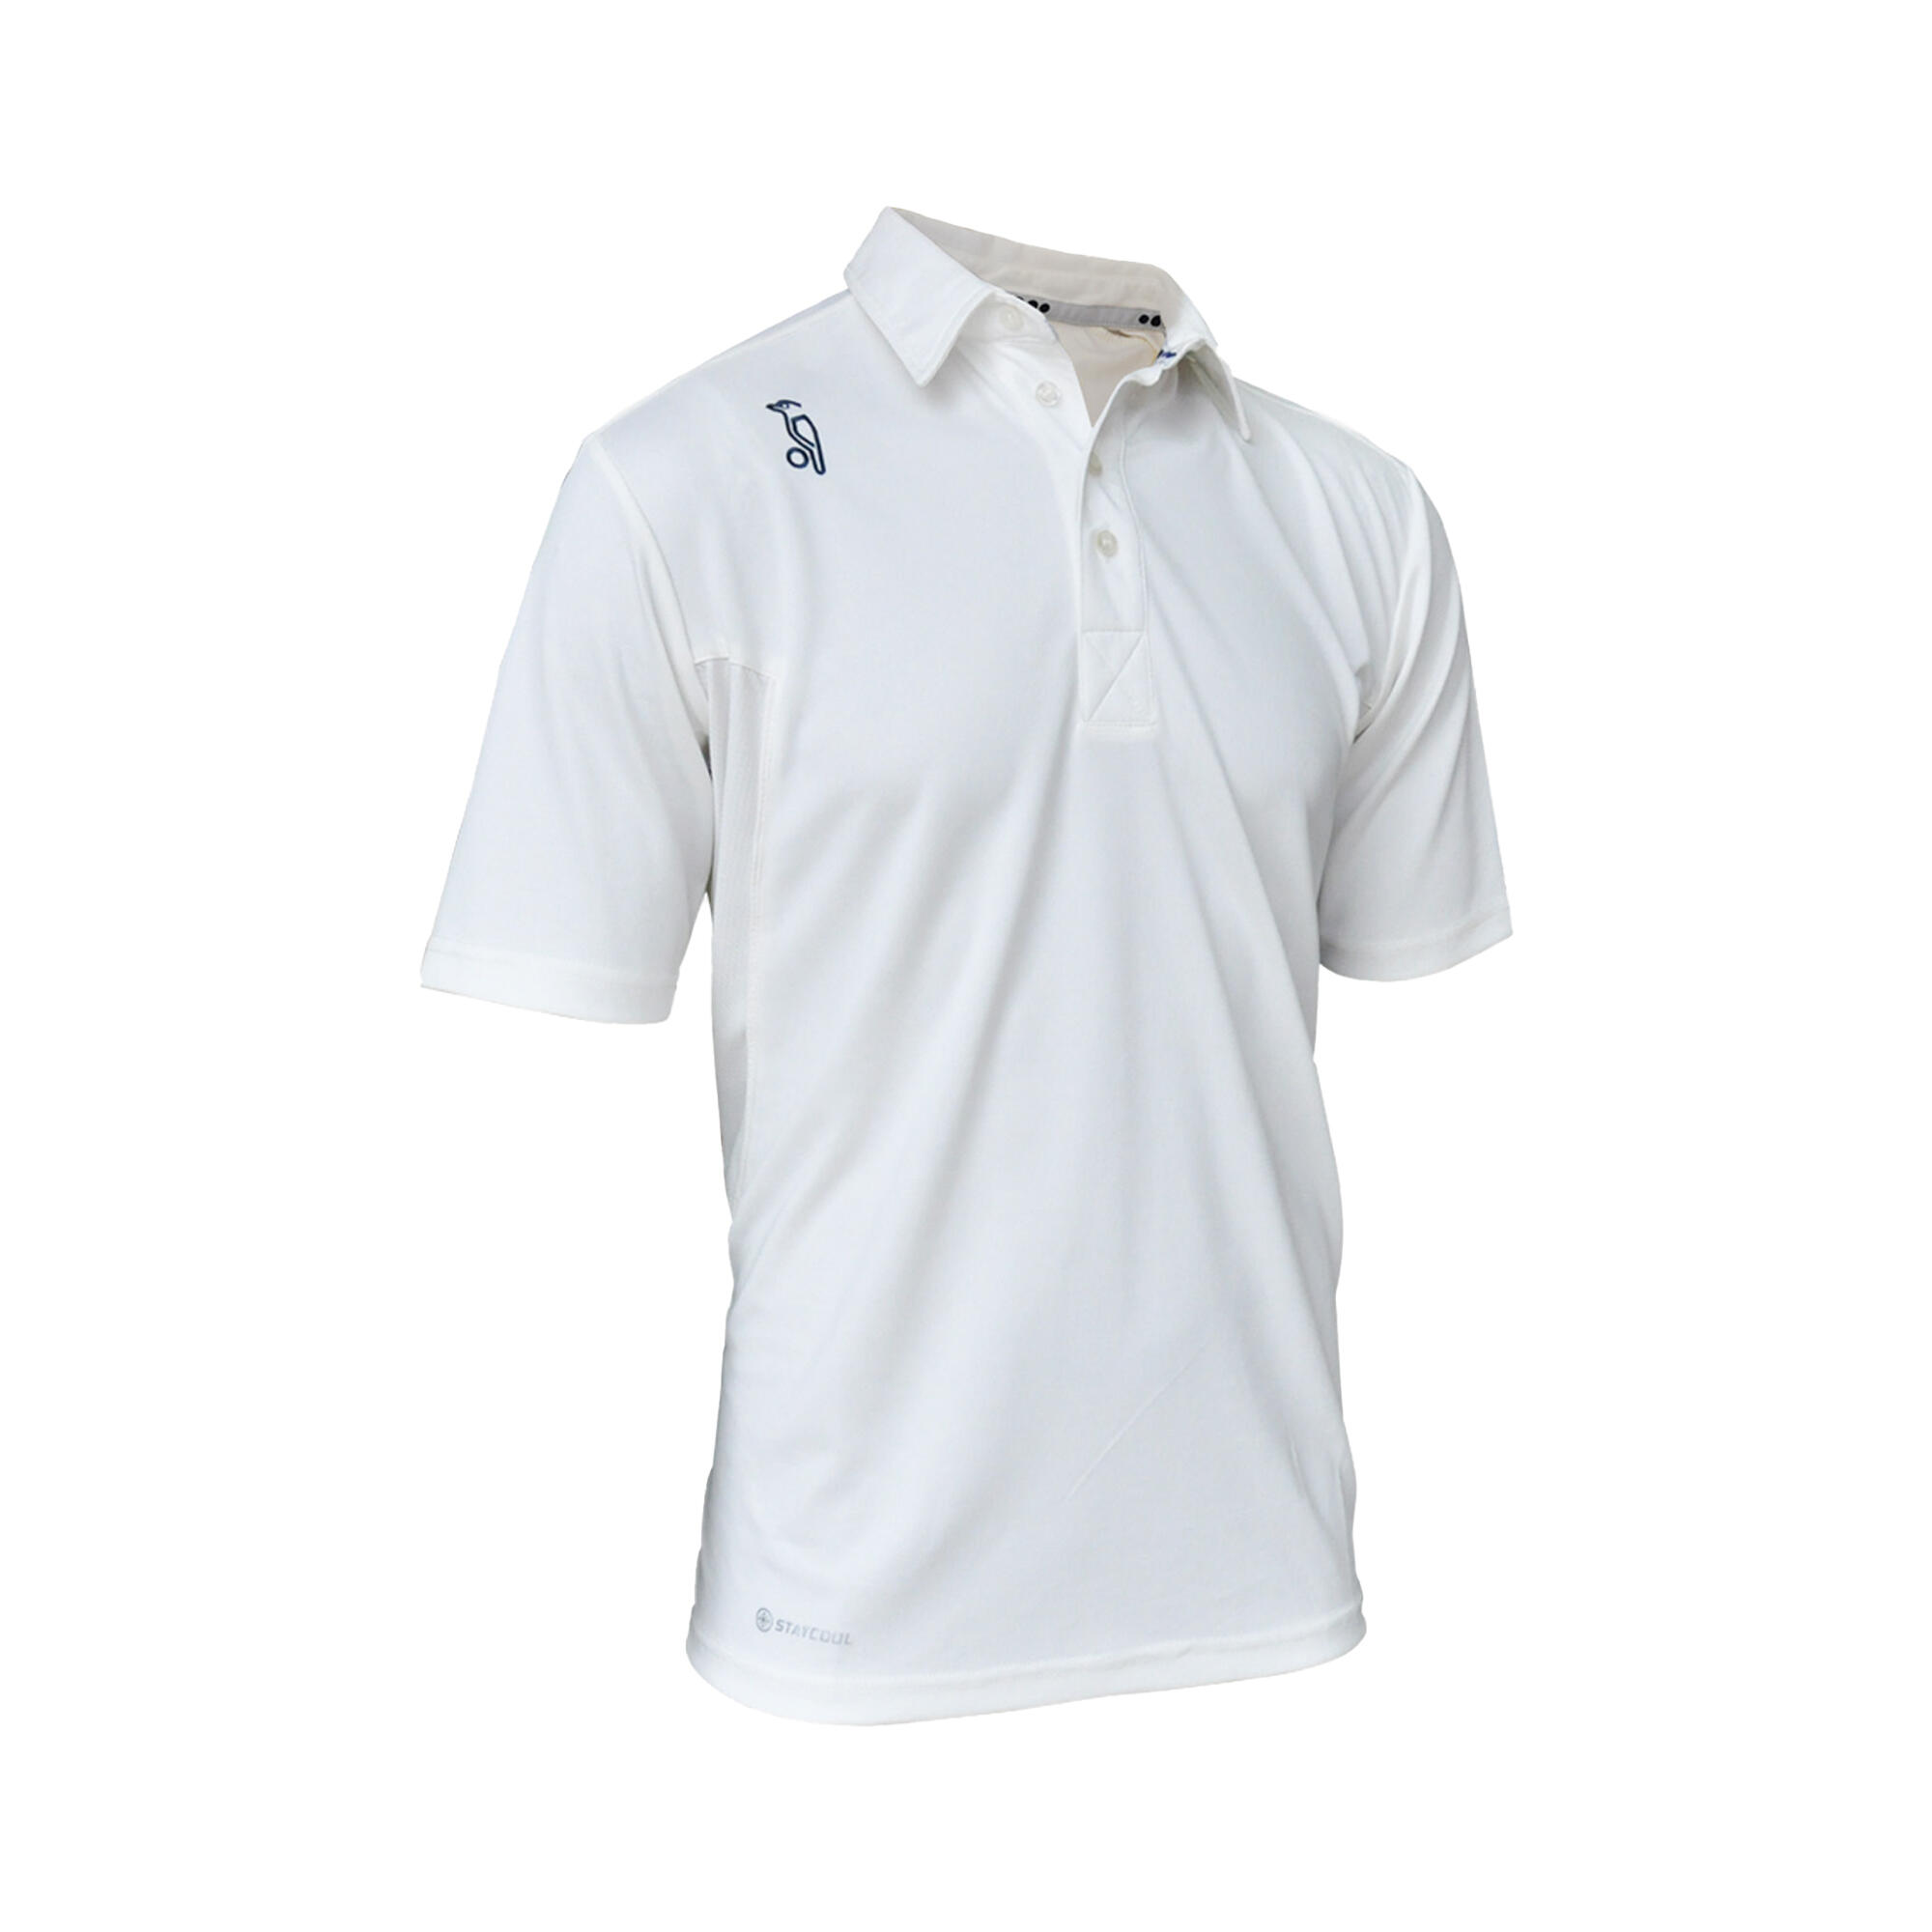 Boys Pro Players Cricket Shirt (White) 1/3